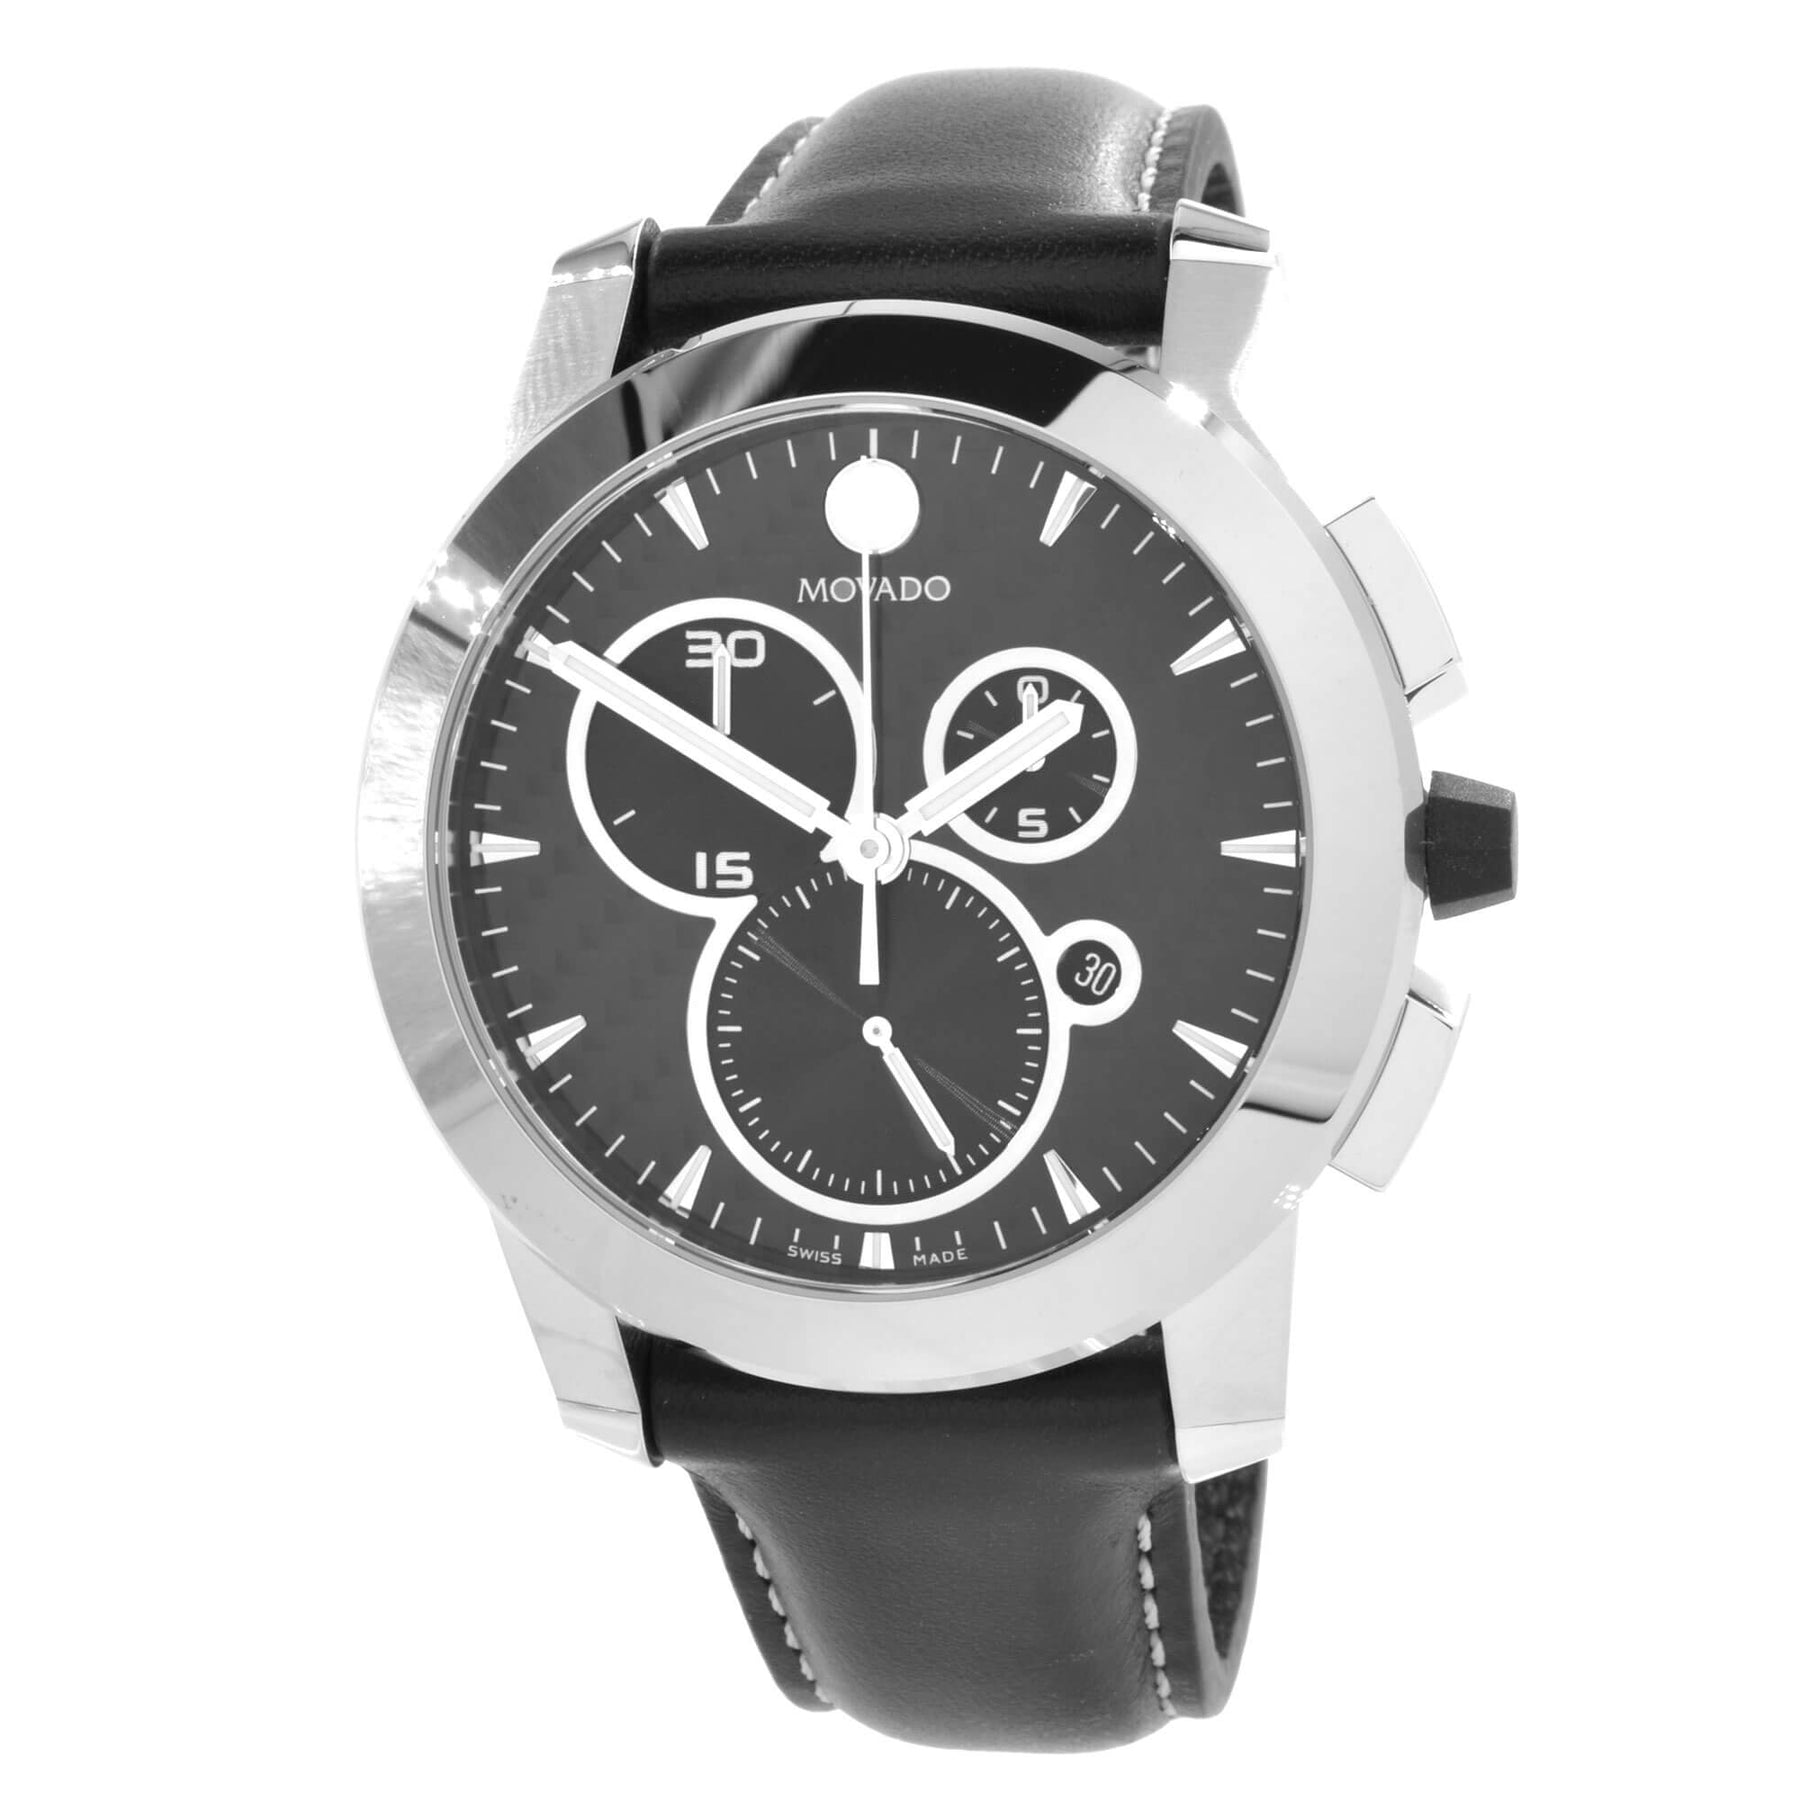 Movado Men's Chronograph Watch - Vizio Carbon Fiber Black Dial Rubber